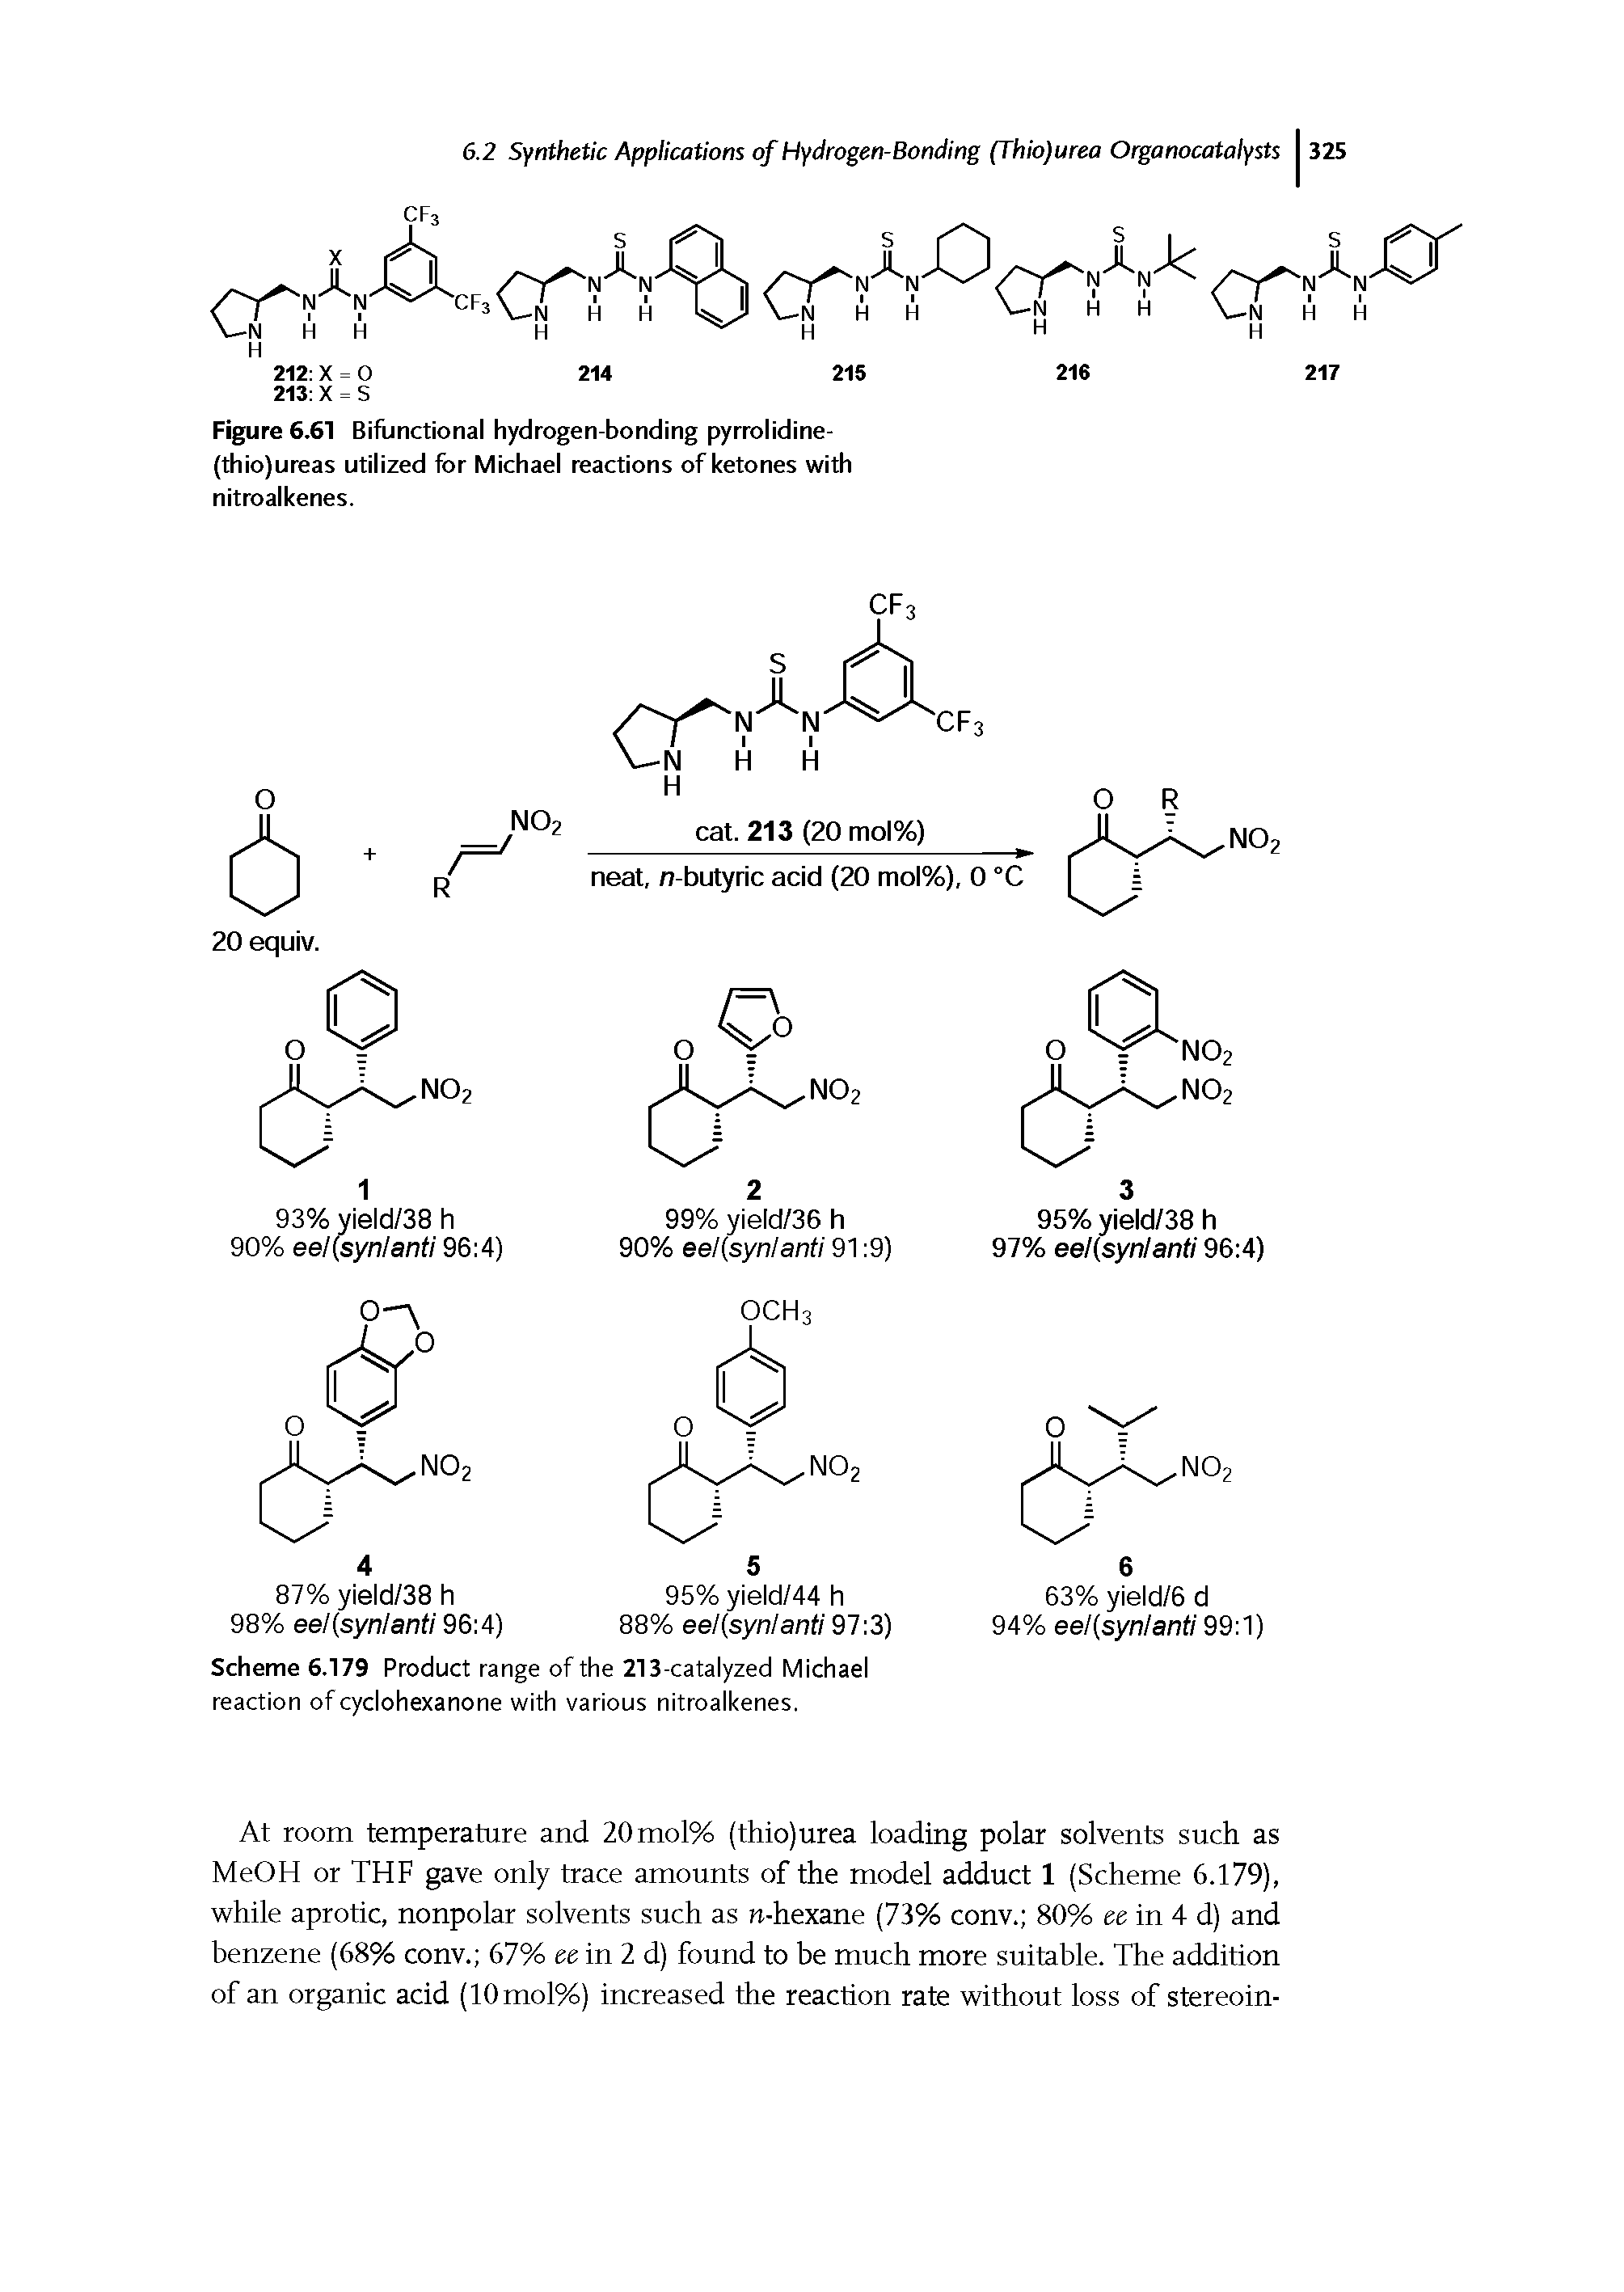 Figure 6.61 Bifunctional hydrogen-bonding pyrrolidine-(thio)ureas utilized for Michael reactions of ketones with nitroalkenes.